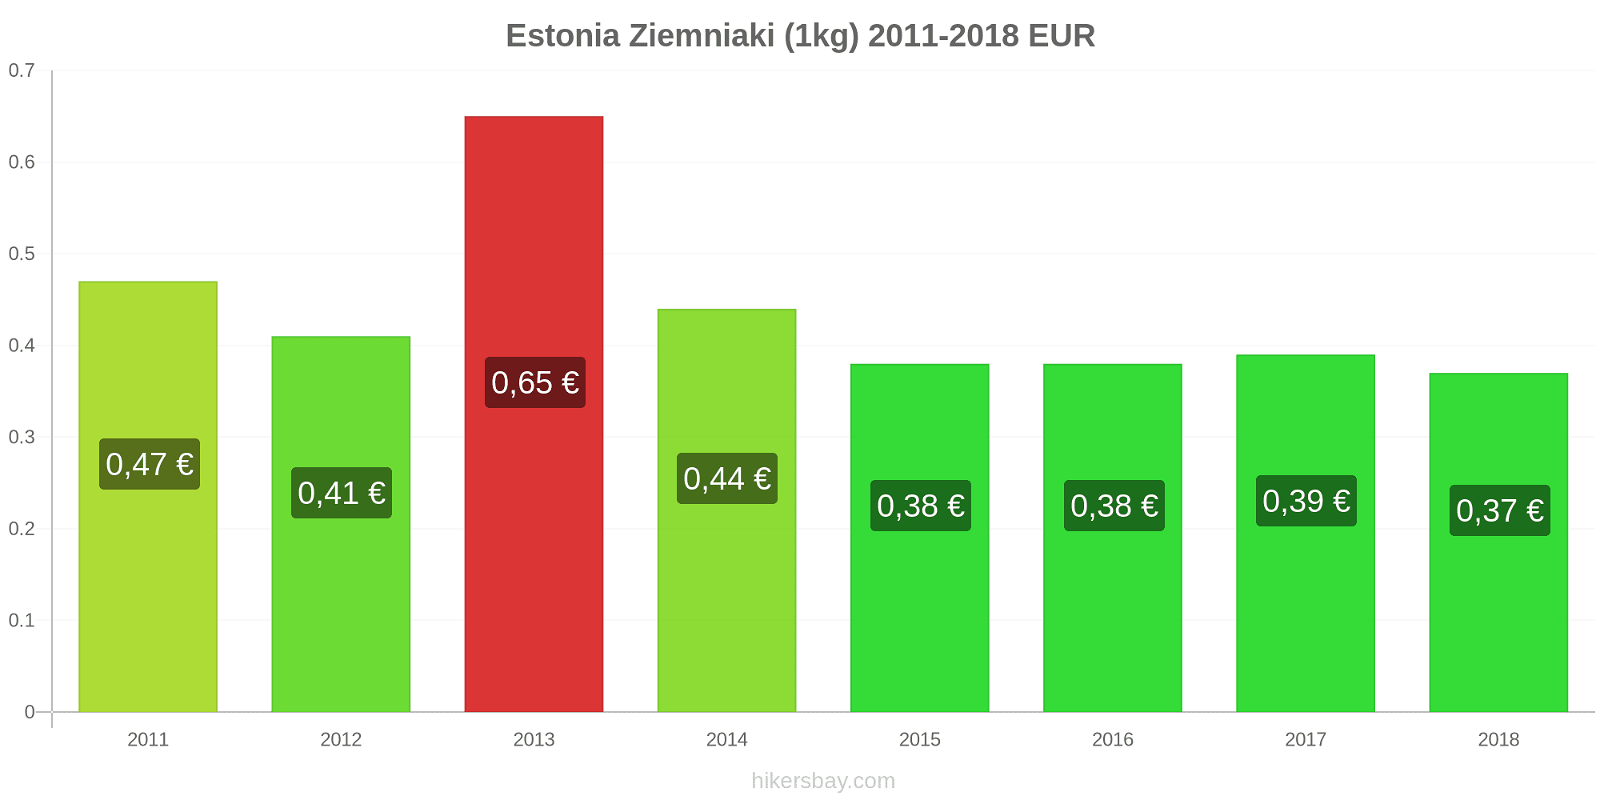 Estonia zmiany cen Ziemniaki (1kg) hikersbay.com